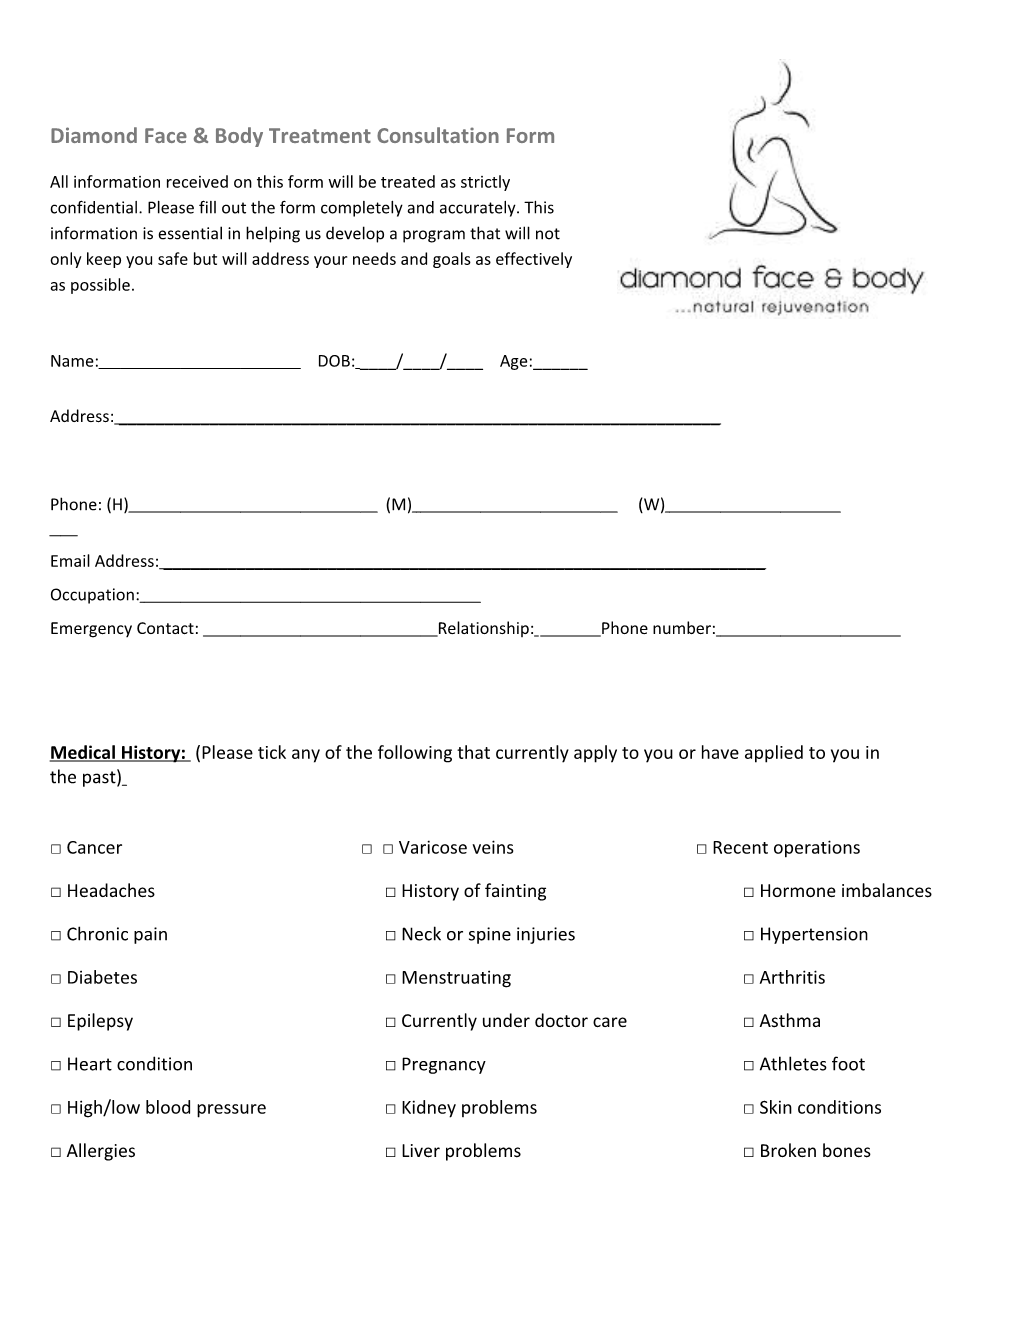 Diamond Face & Body Treatment Consultation Form